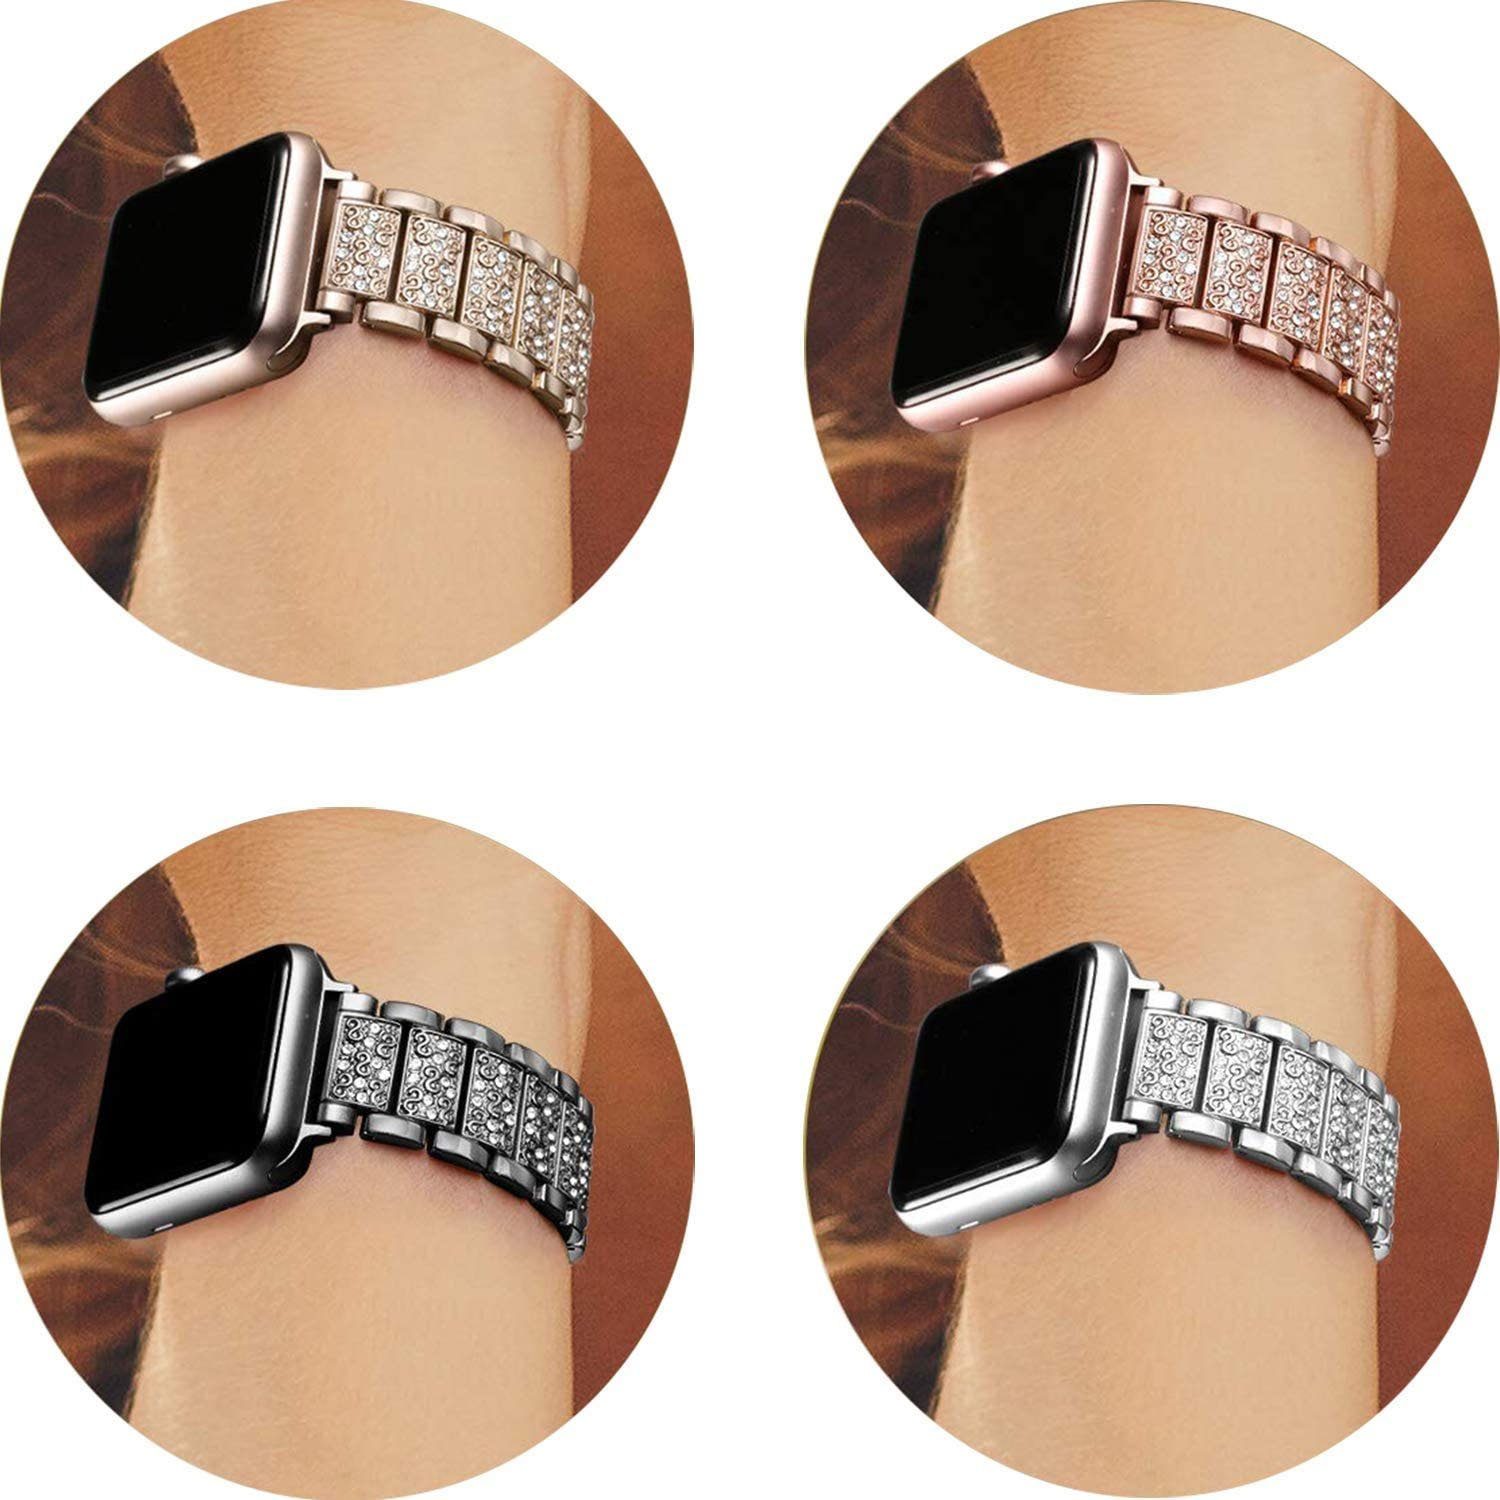 Apple Watch Armband«Für Edelstahl Uhrenarmband rosa Strass Diamant zggzerg Band, Metall